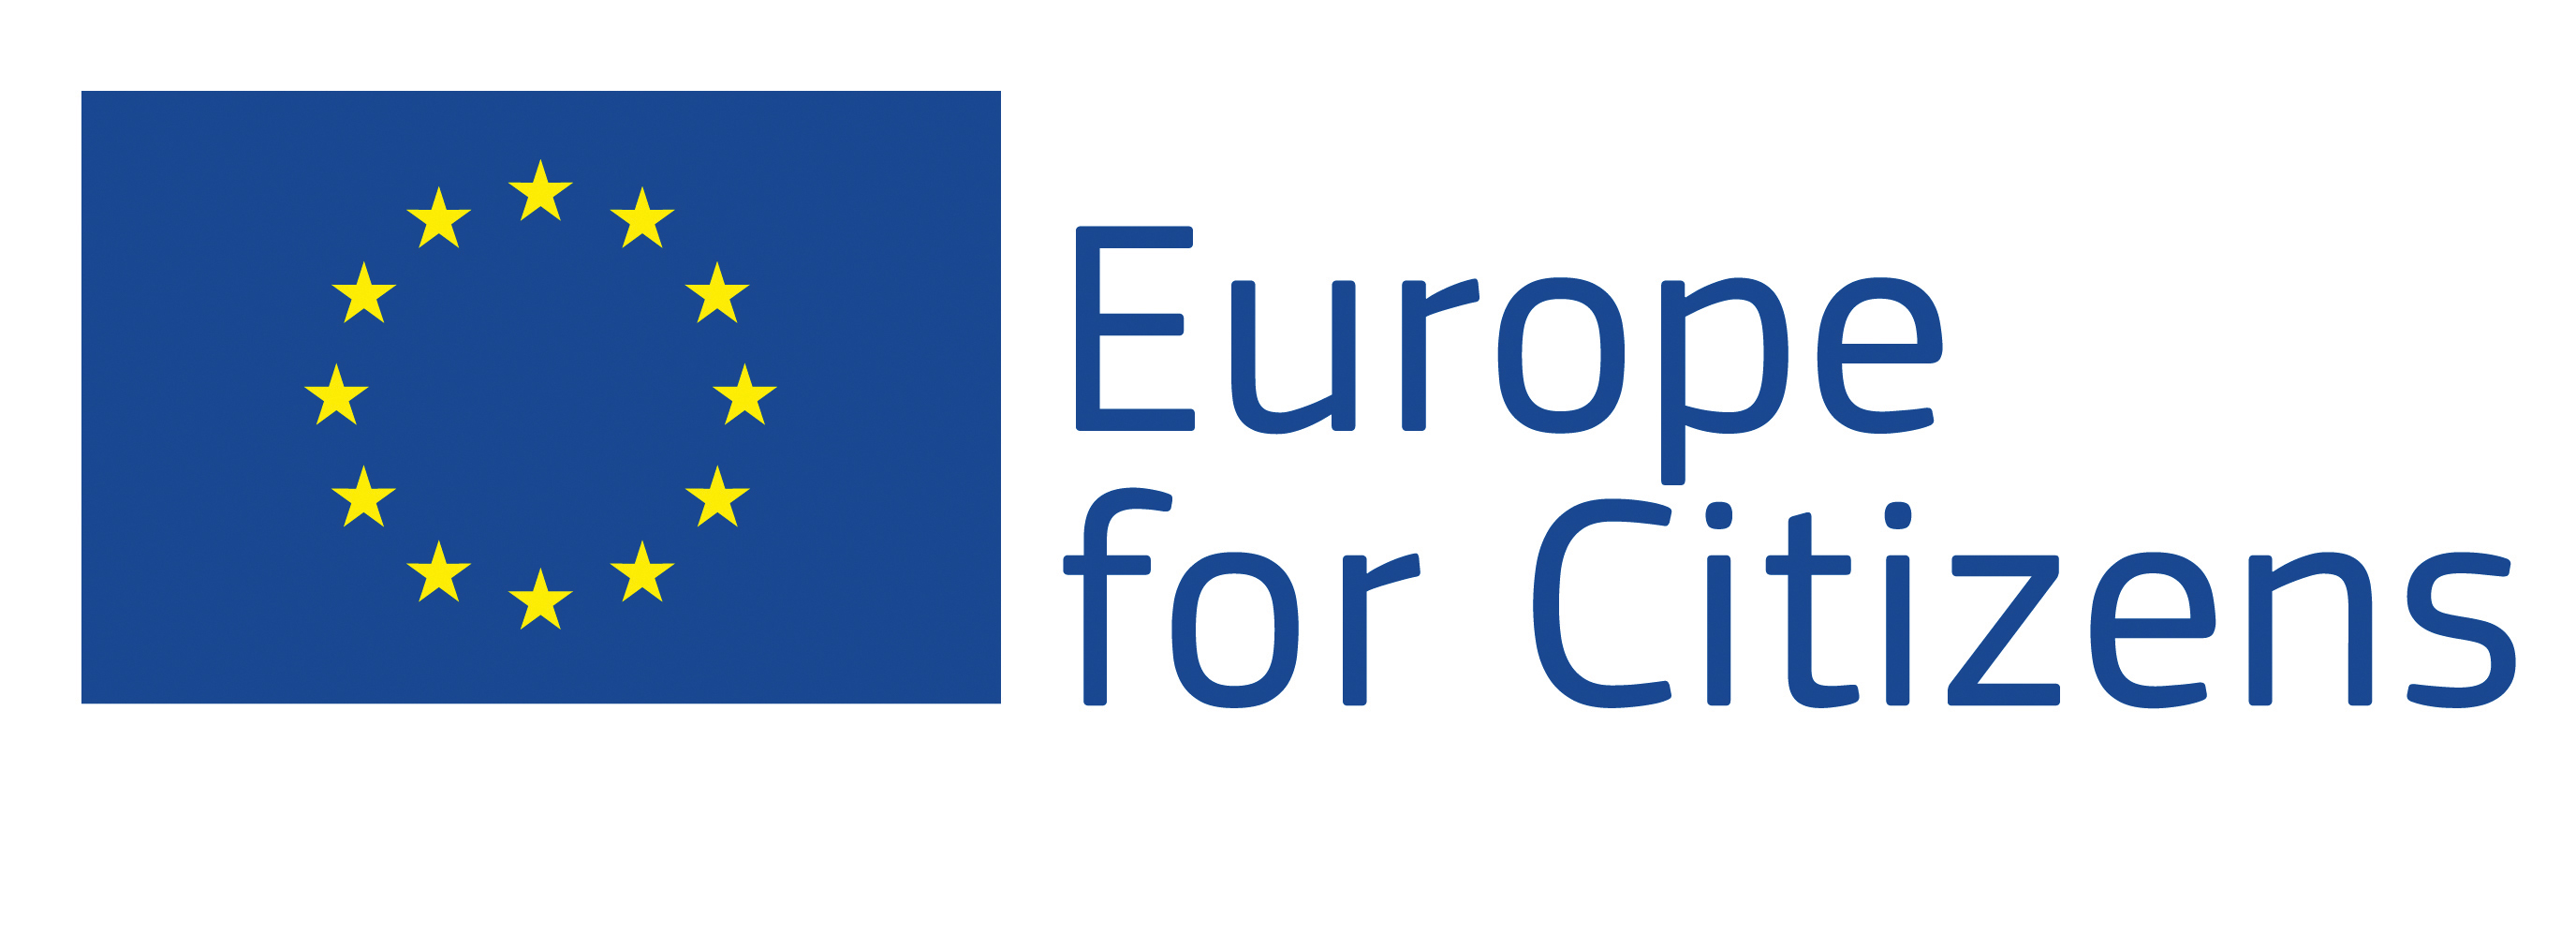 eu_flag_europe_for_citizens_en